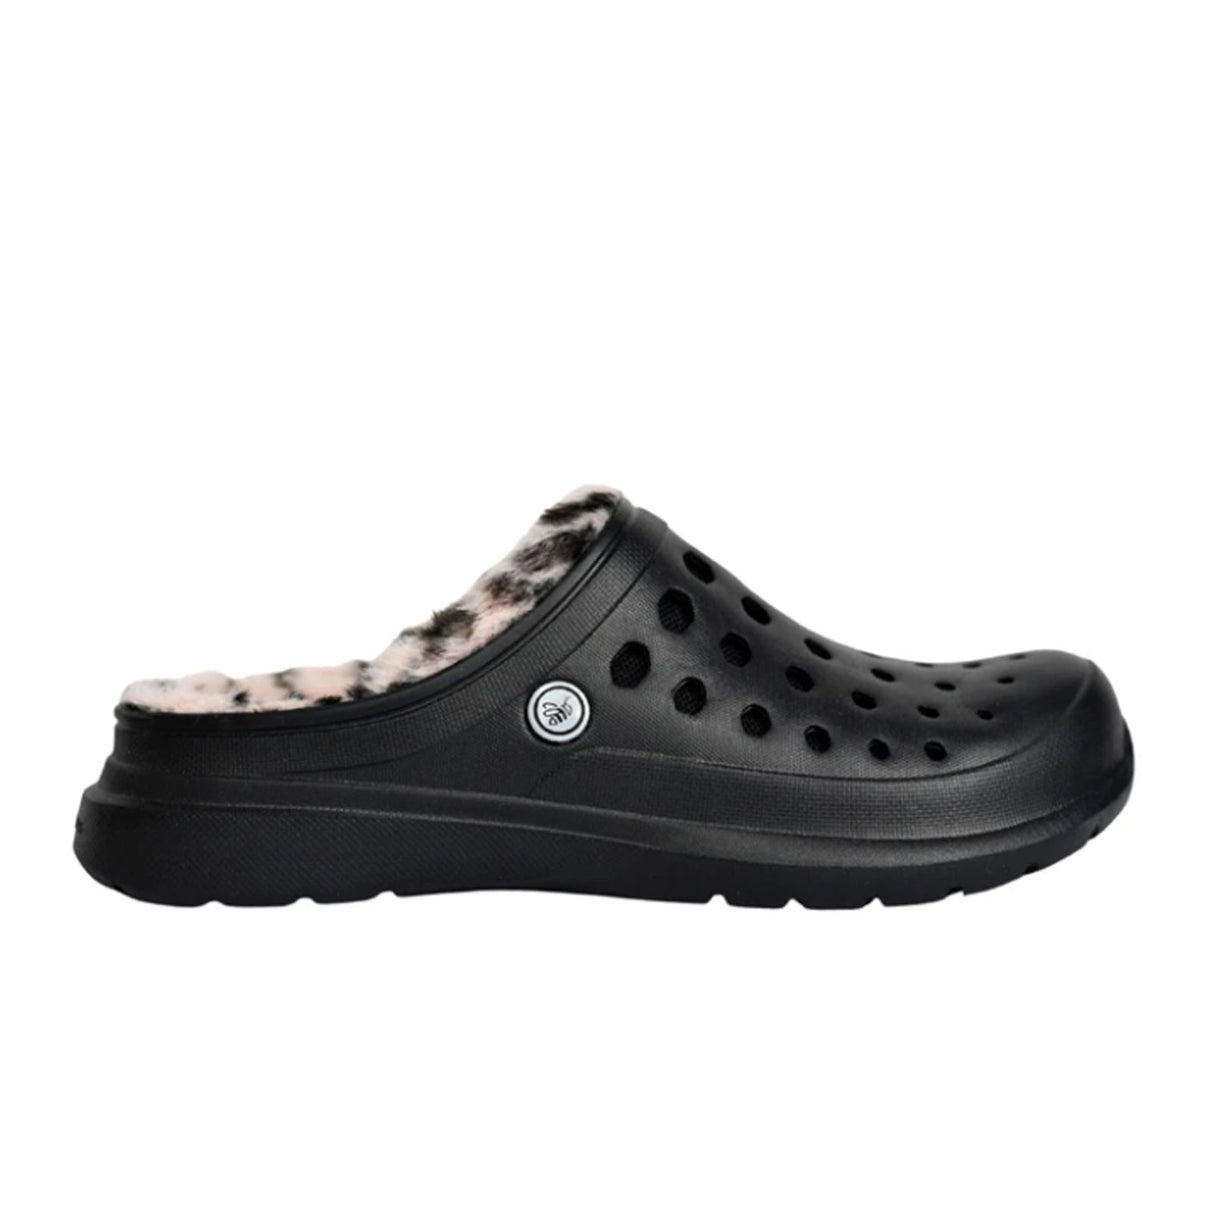 Joybees Cozy Lined Clog (Unisex) - Black/Cheetah – The Heel Shoe Fitters